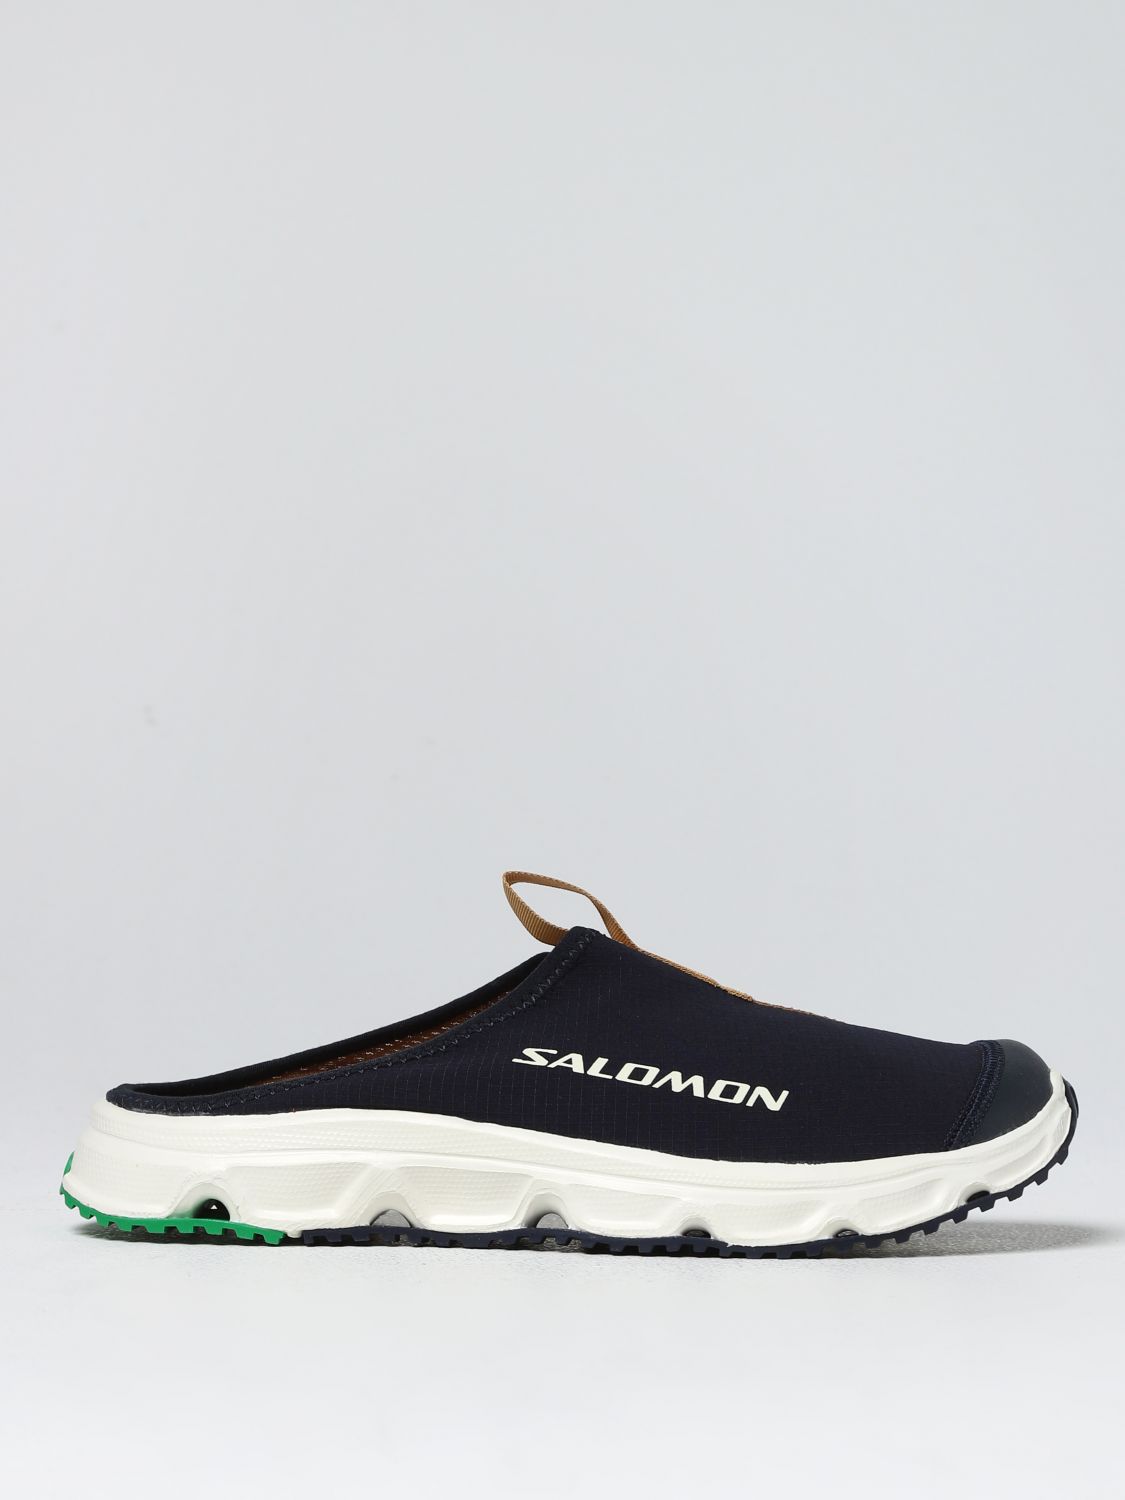 SALOMON: sneakers for man - Sapphire | Salomon sneakers L47131500 ...